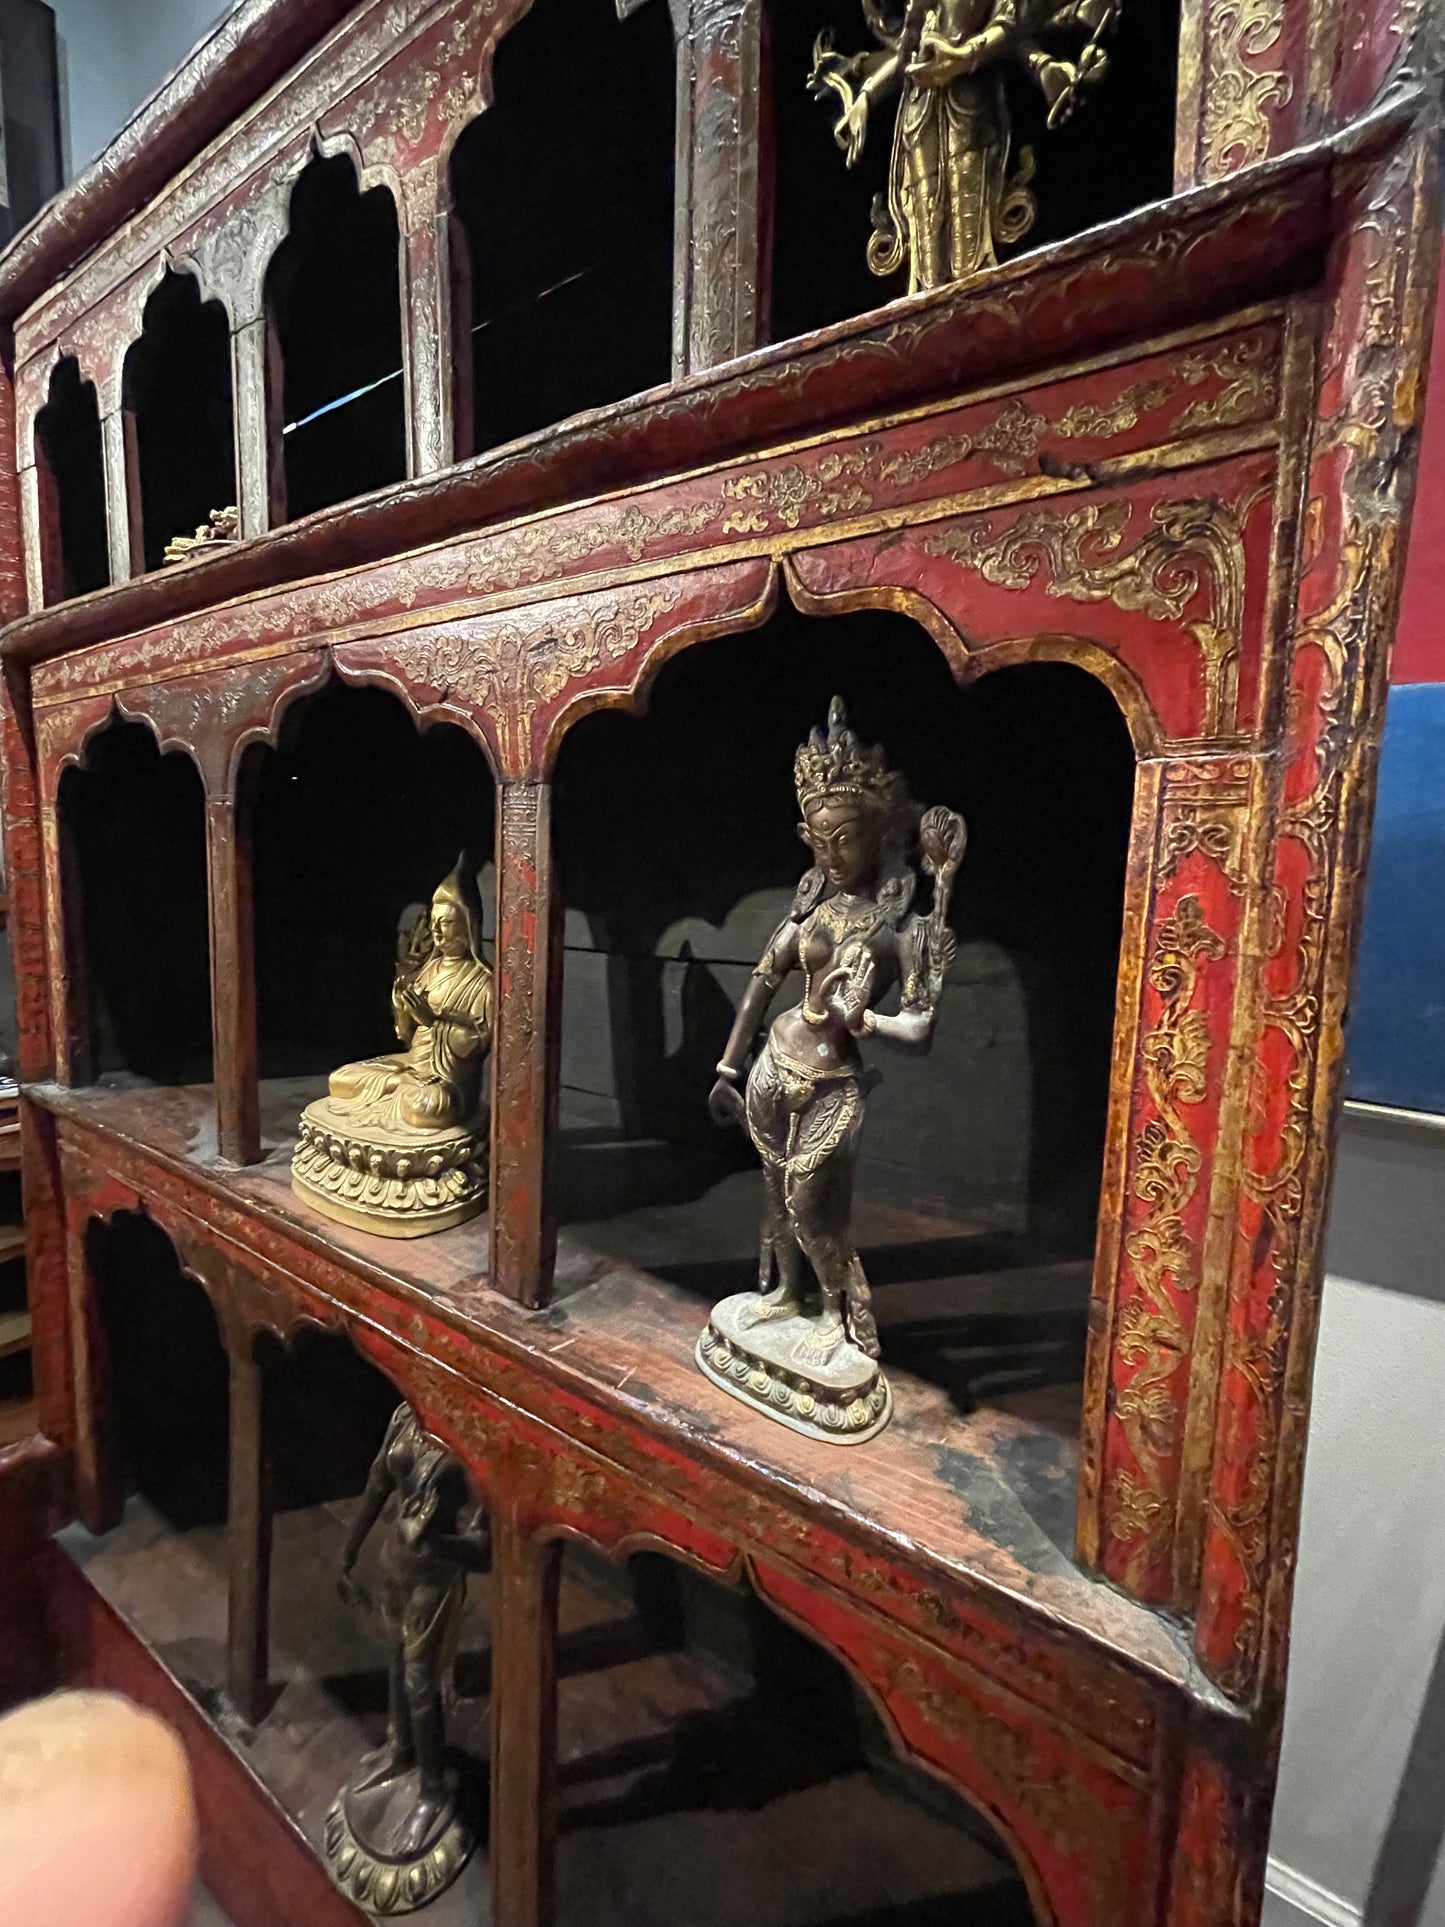 An antique late 19th. c. Tibetan shrine cabinet